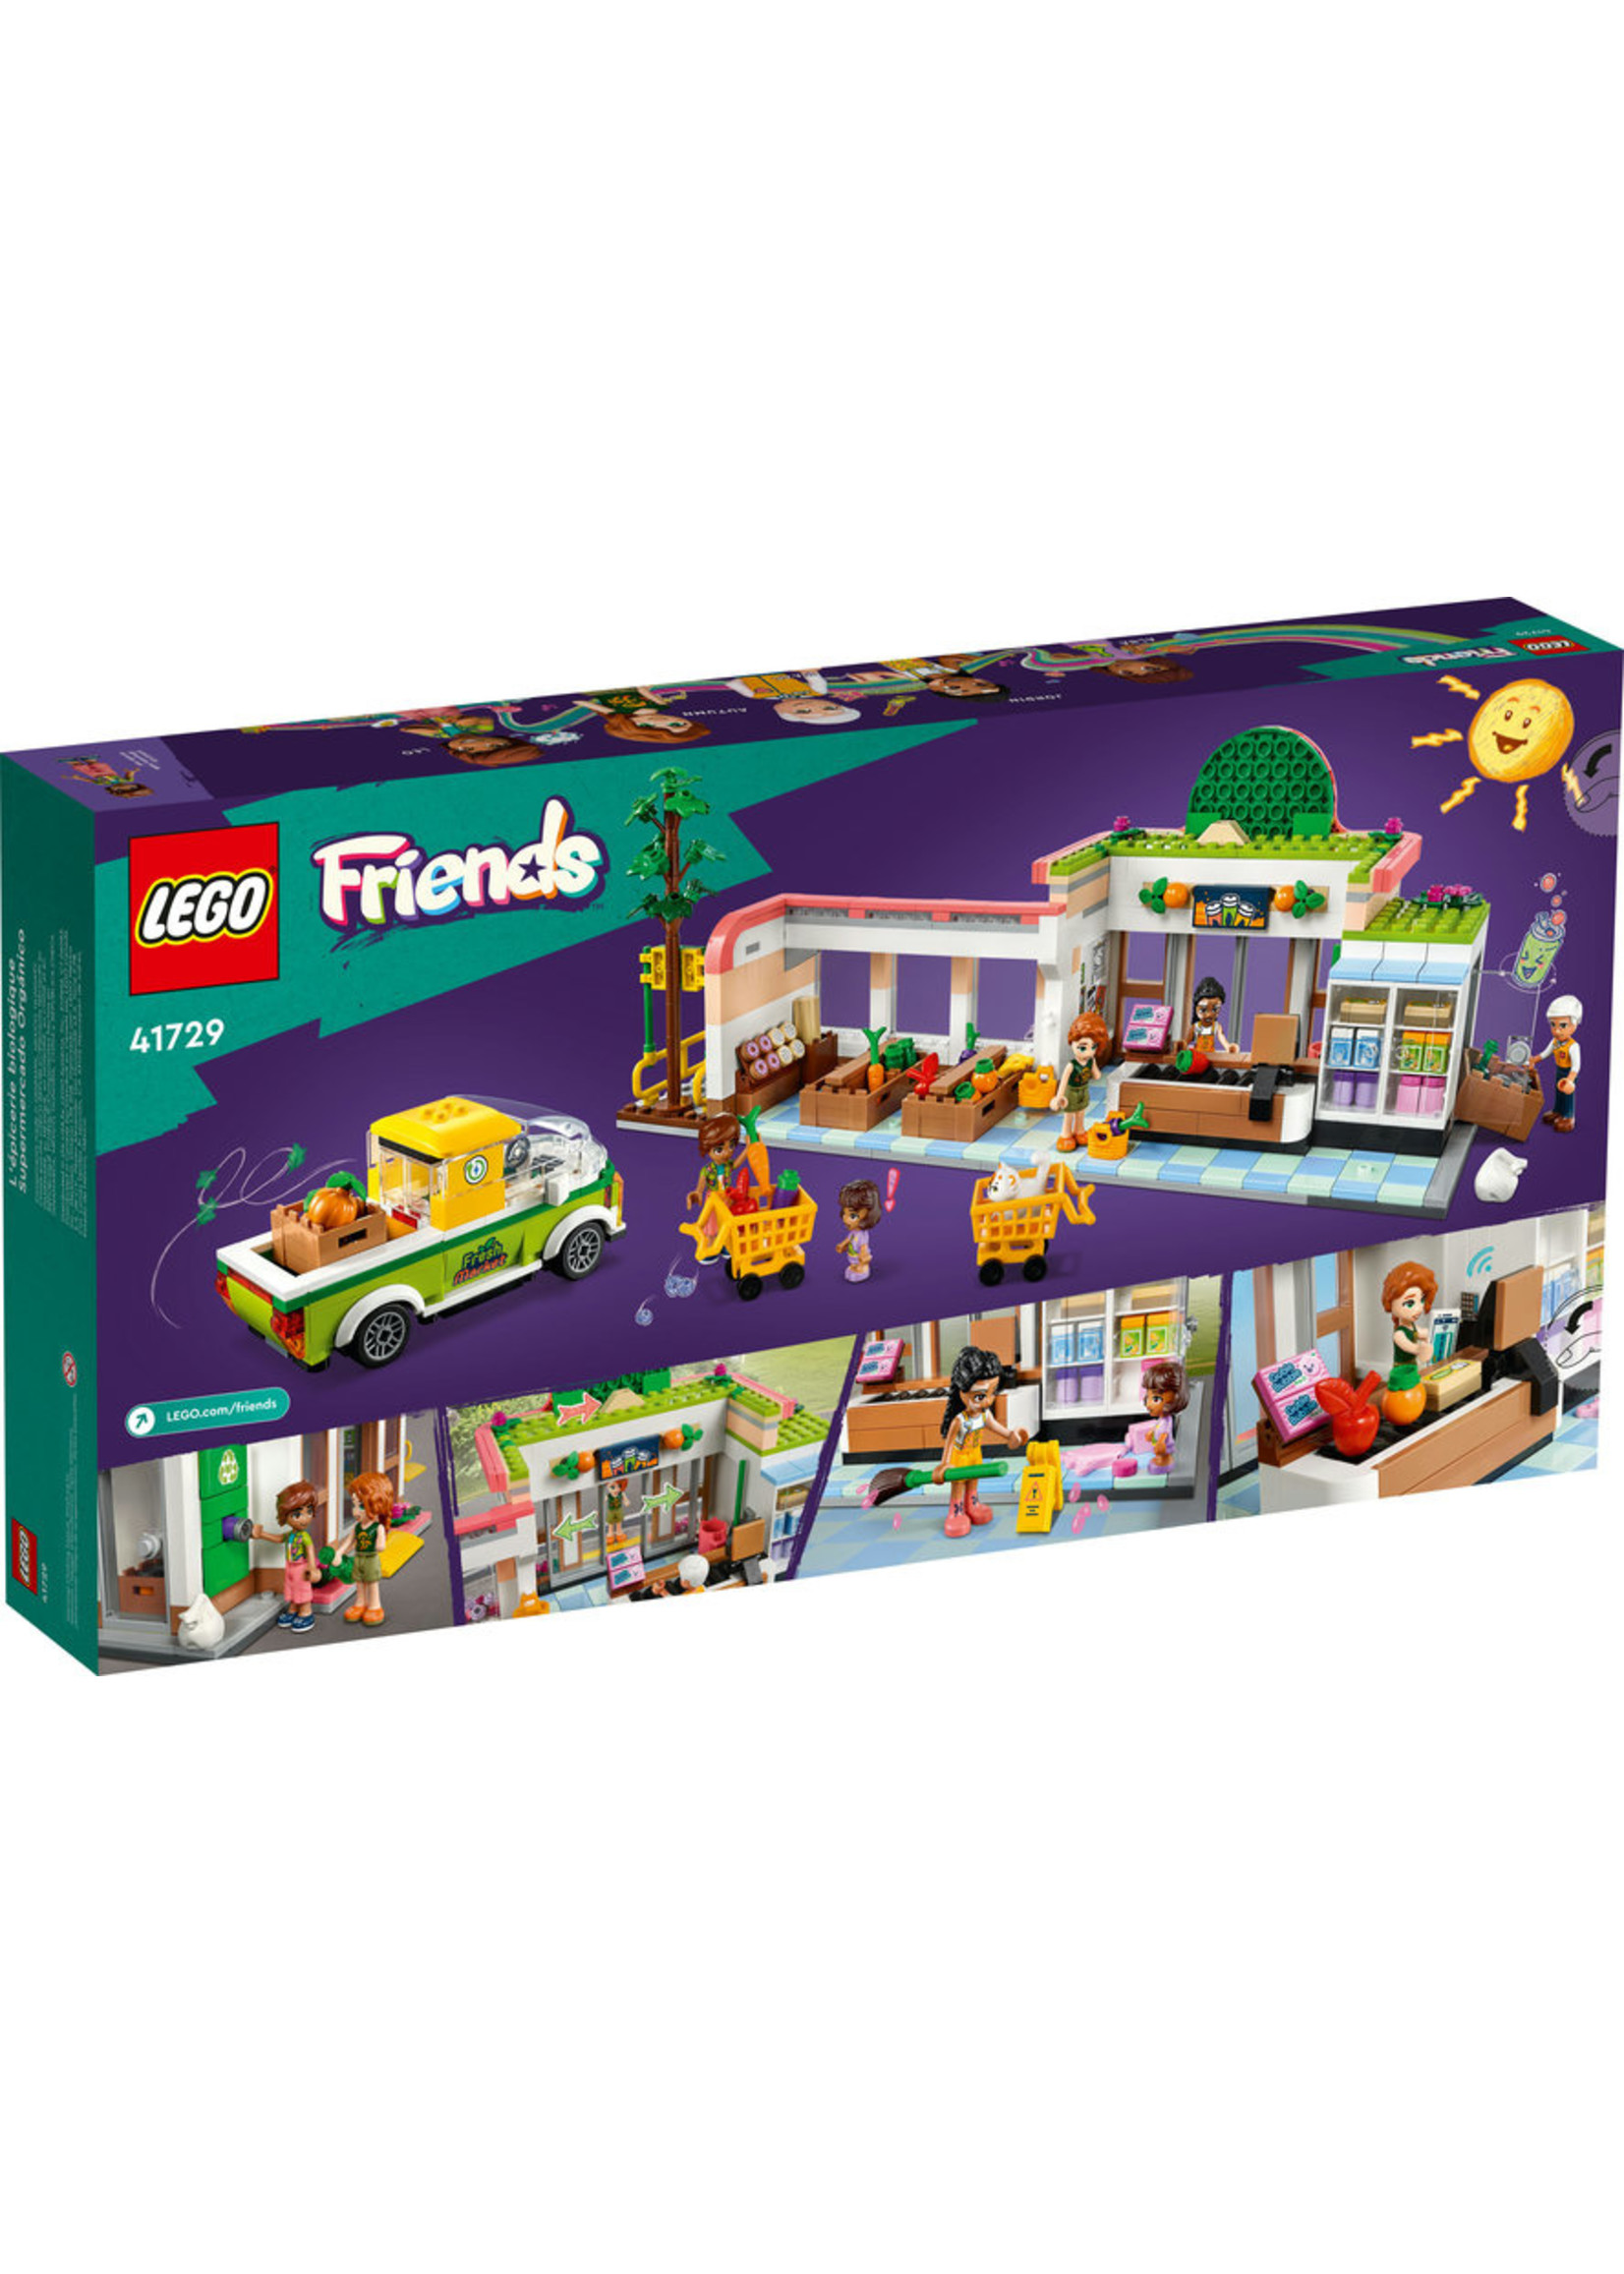 LEGO 41729 - Organic Grocery Store